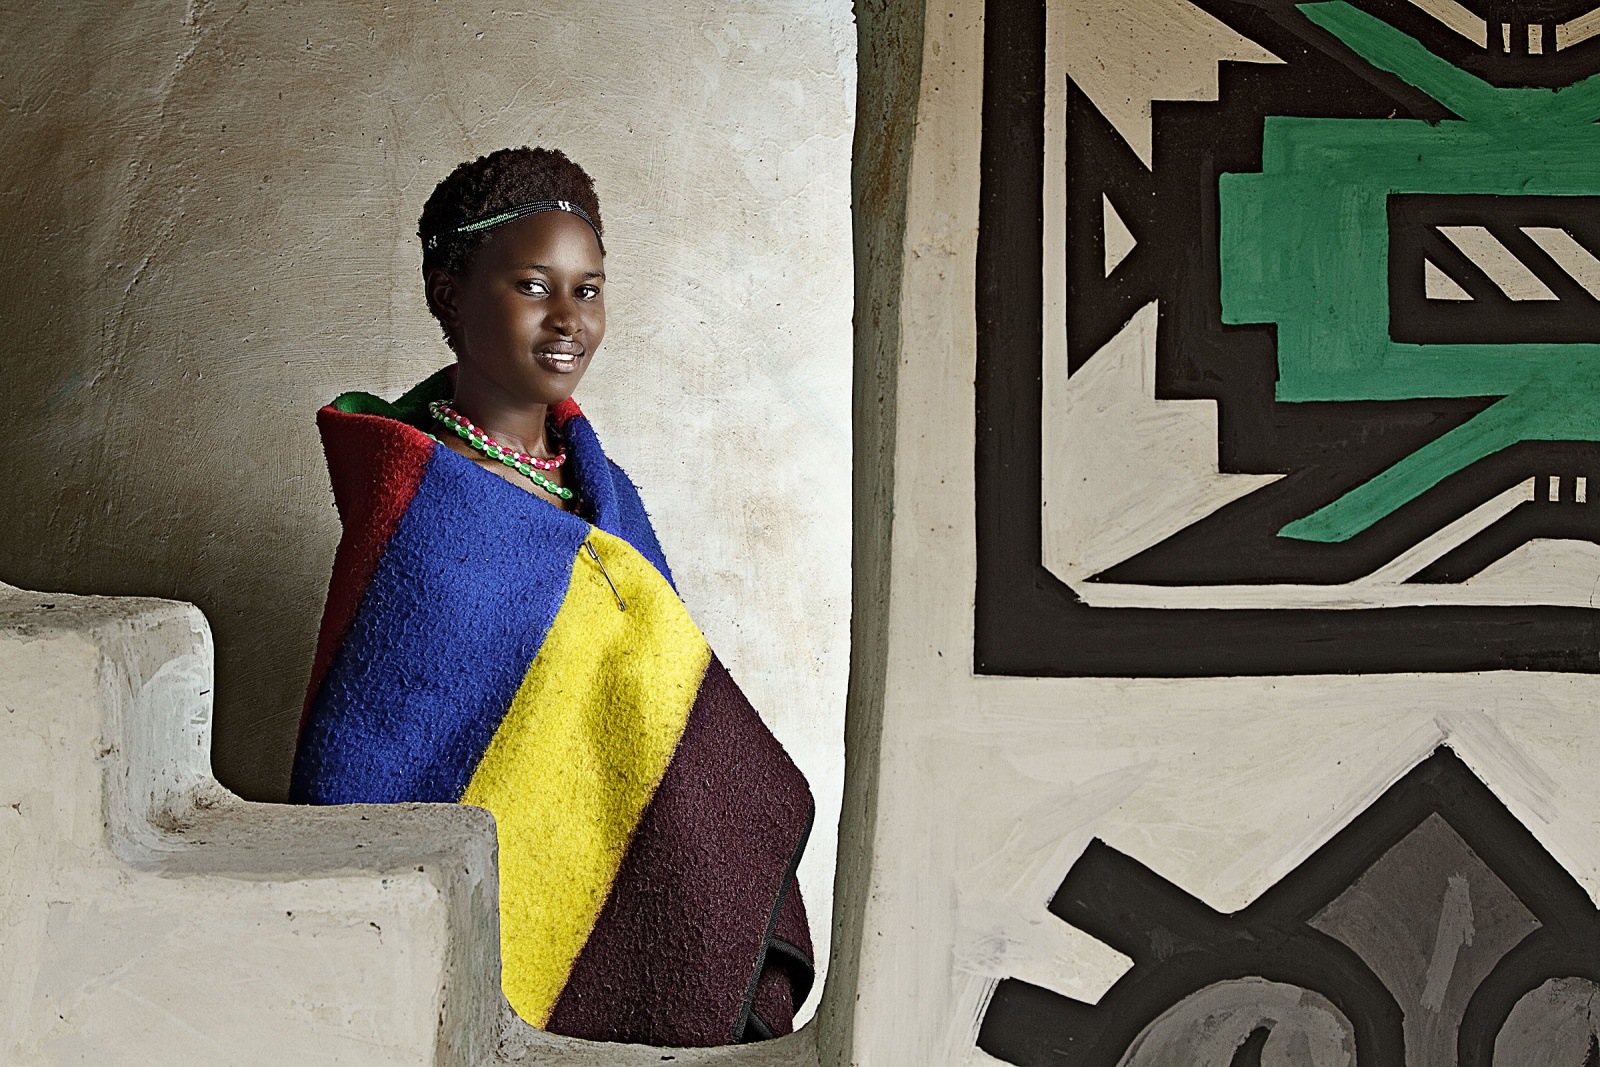 Unmarried Ndebele girl, Mapoch Ndebele Village Mpumalanga - South Africa 2013